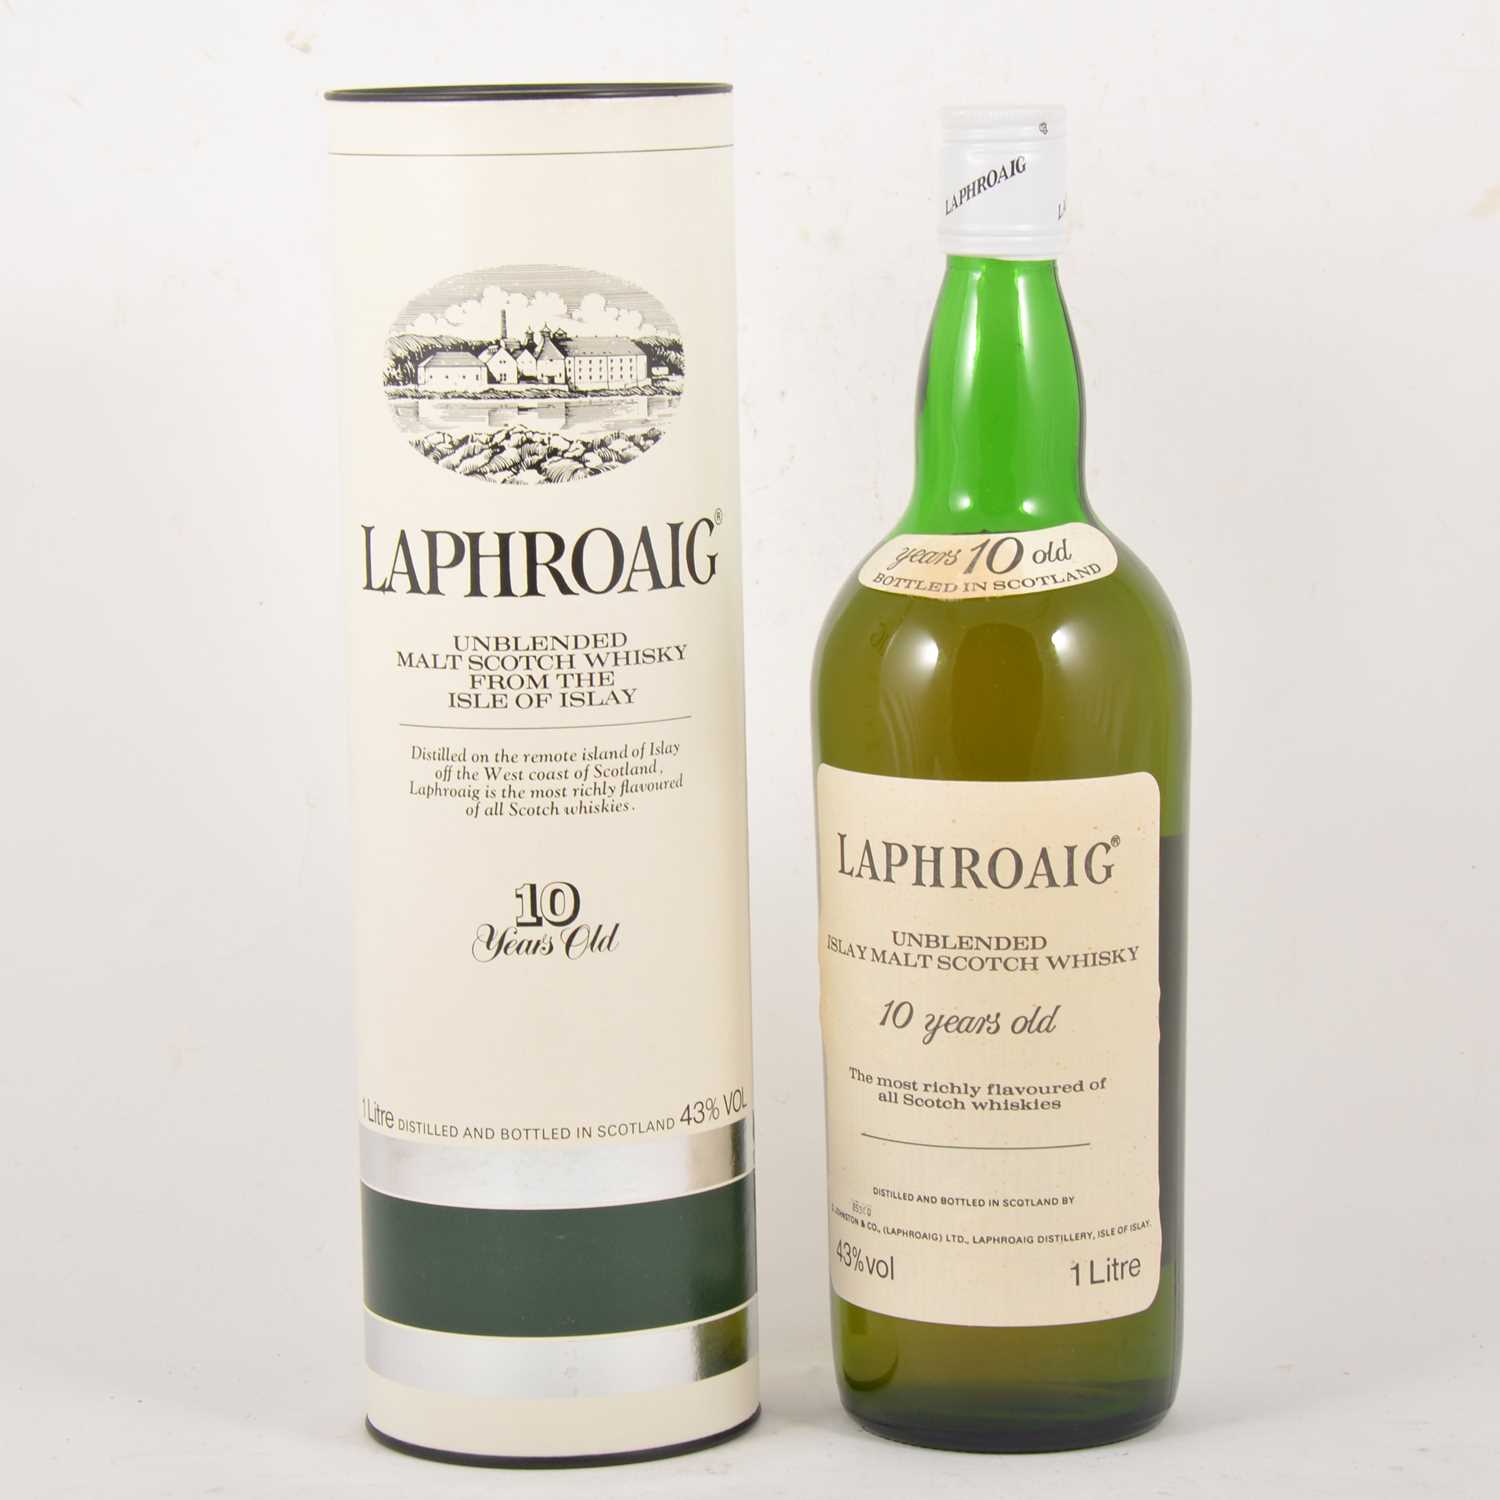 Lot 401 - Laphroaig, 10 year old, single Islay malt Scotch whisky, early 1980s bottling